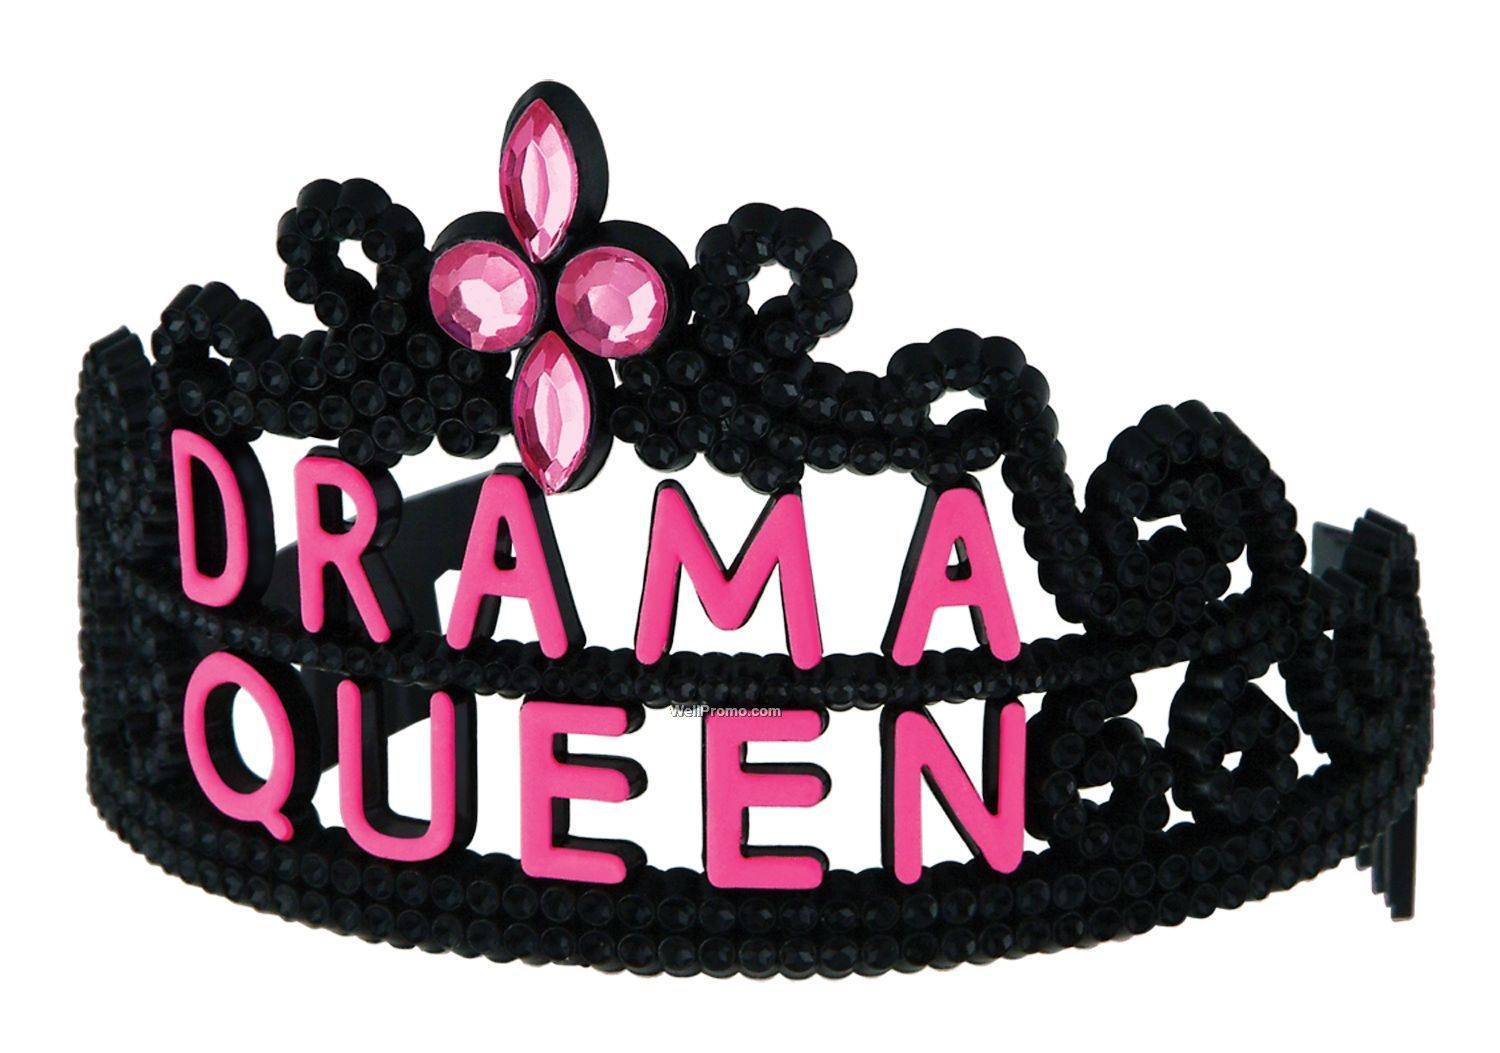 drama-queen-tiara-1-size-fits-263463.jpg